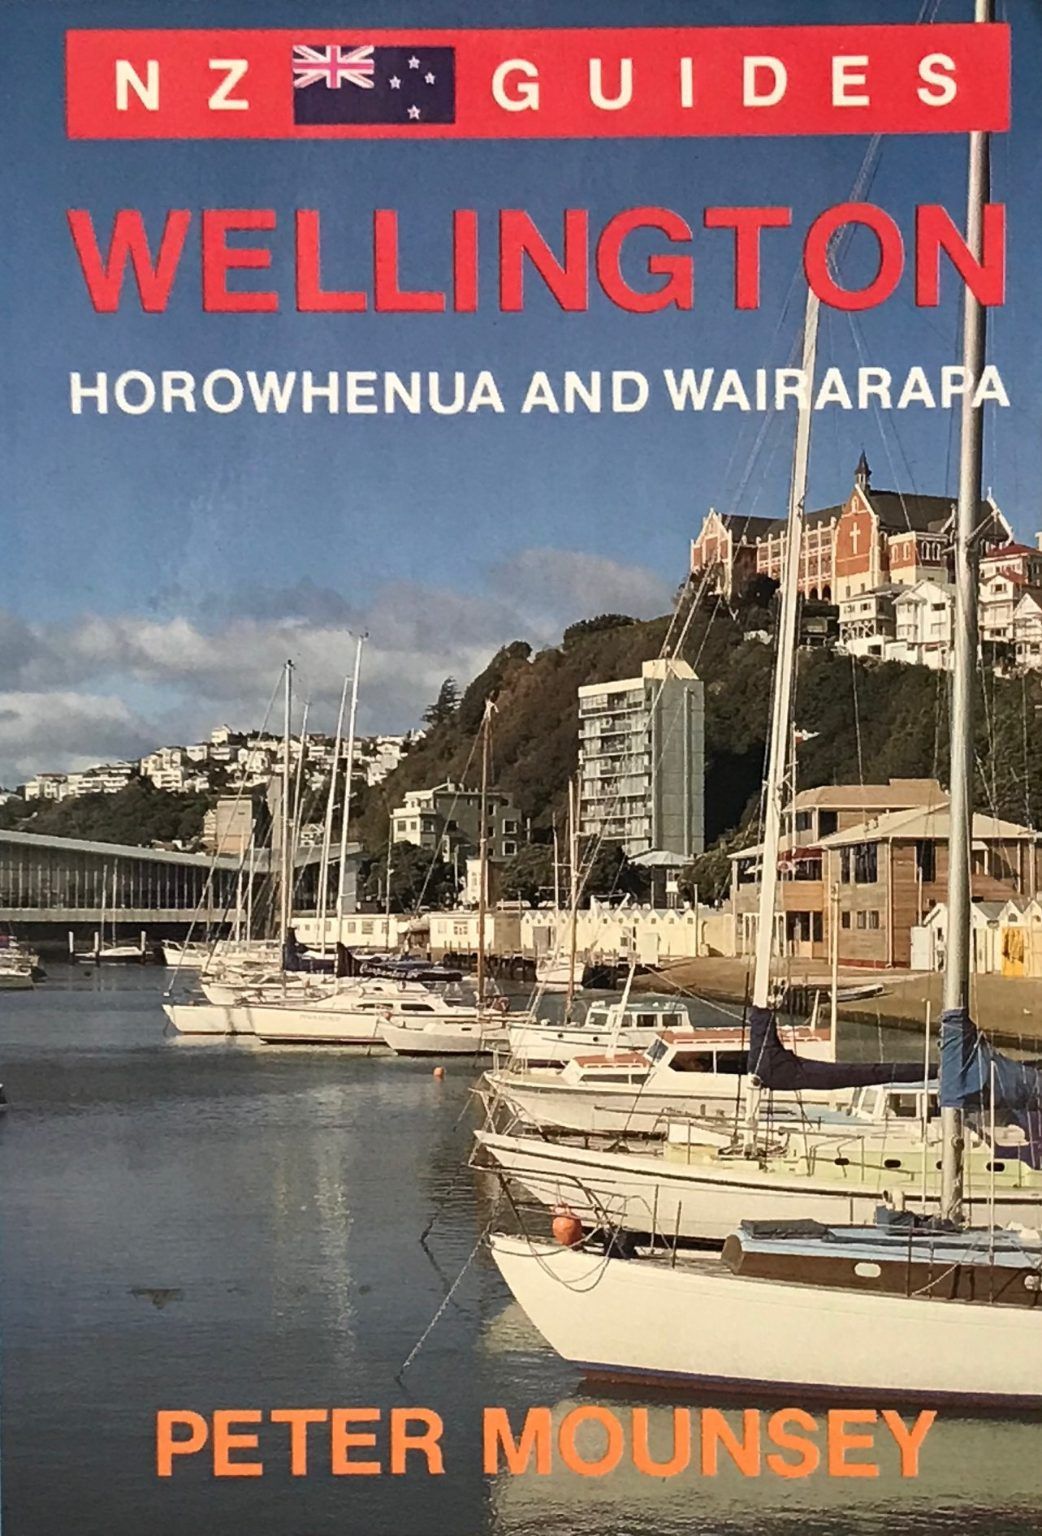 NZ GUIDES: Wellington, Horowhenua and Wairarapapa